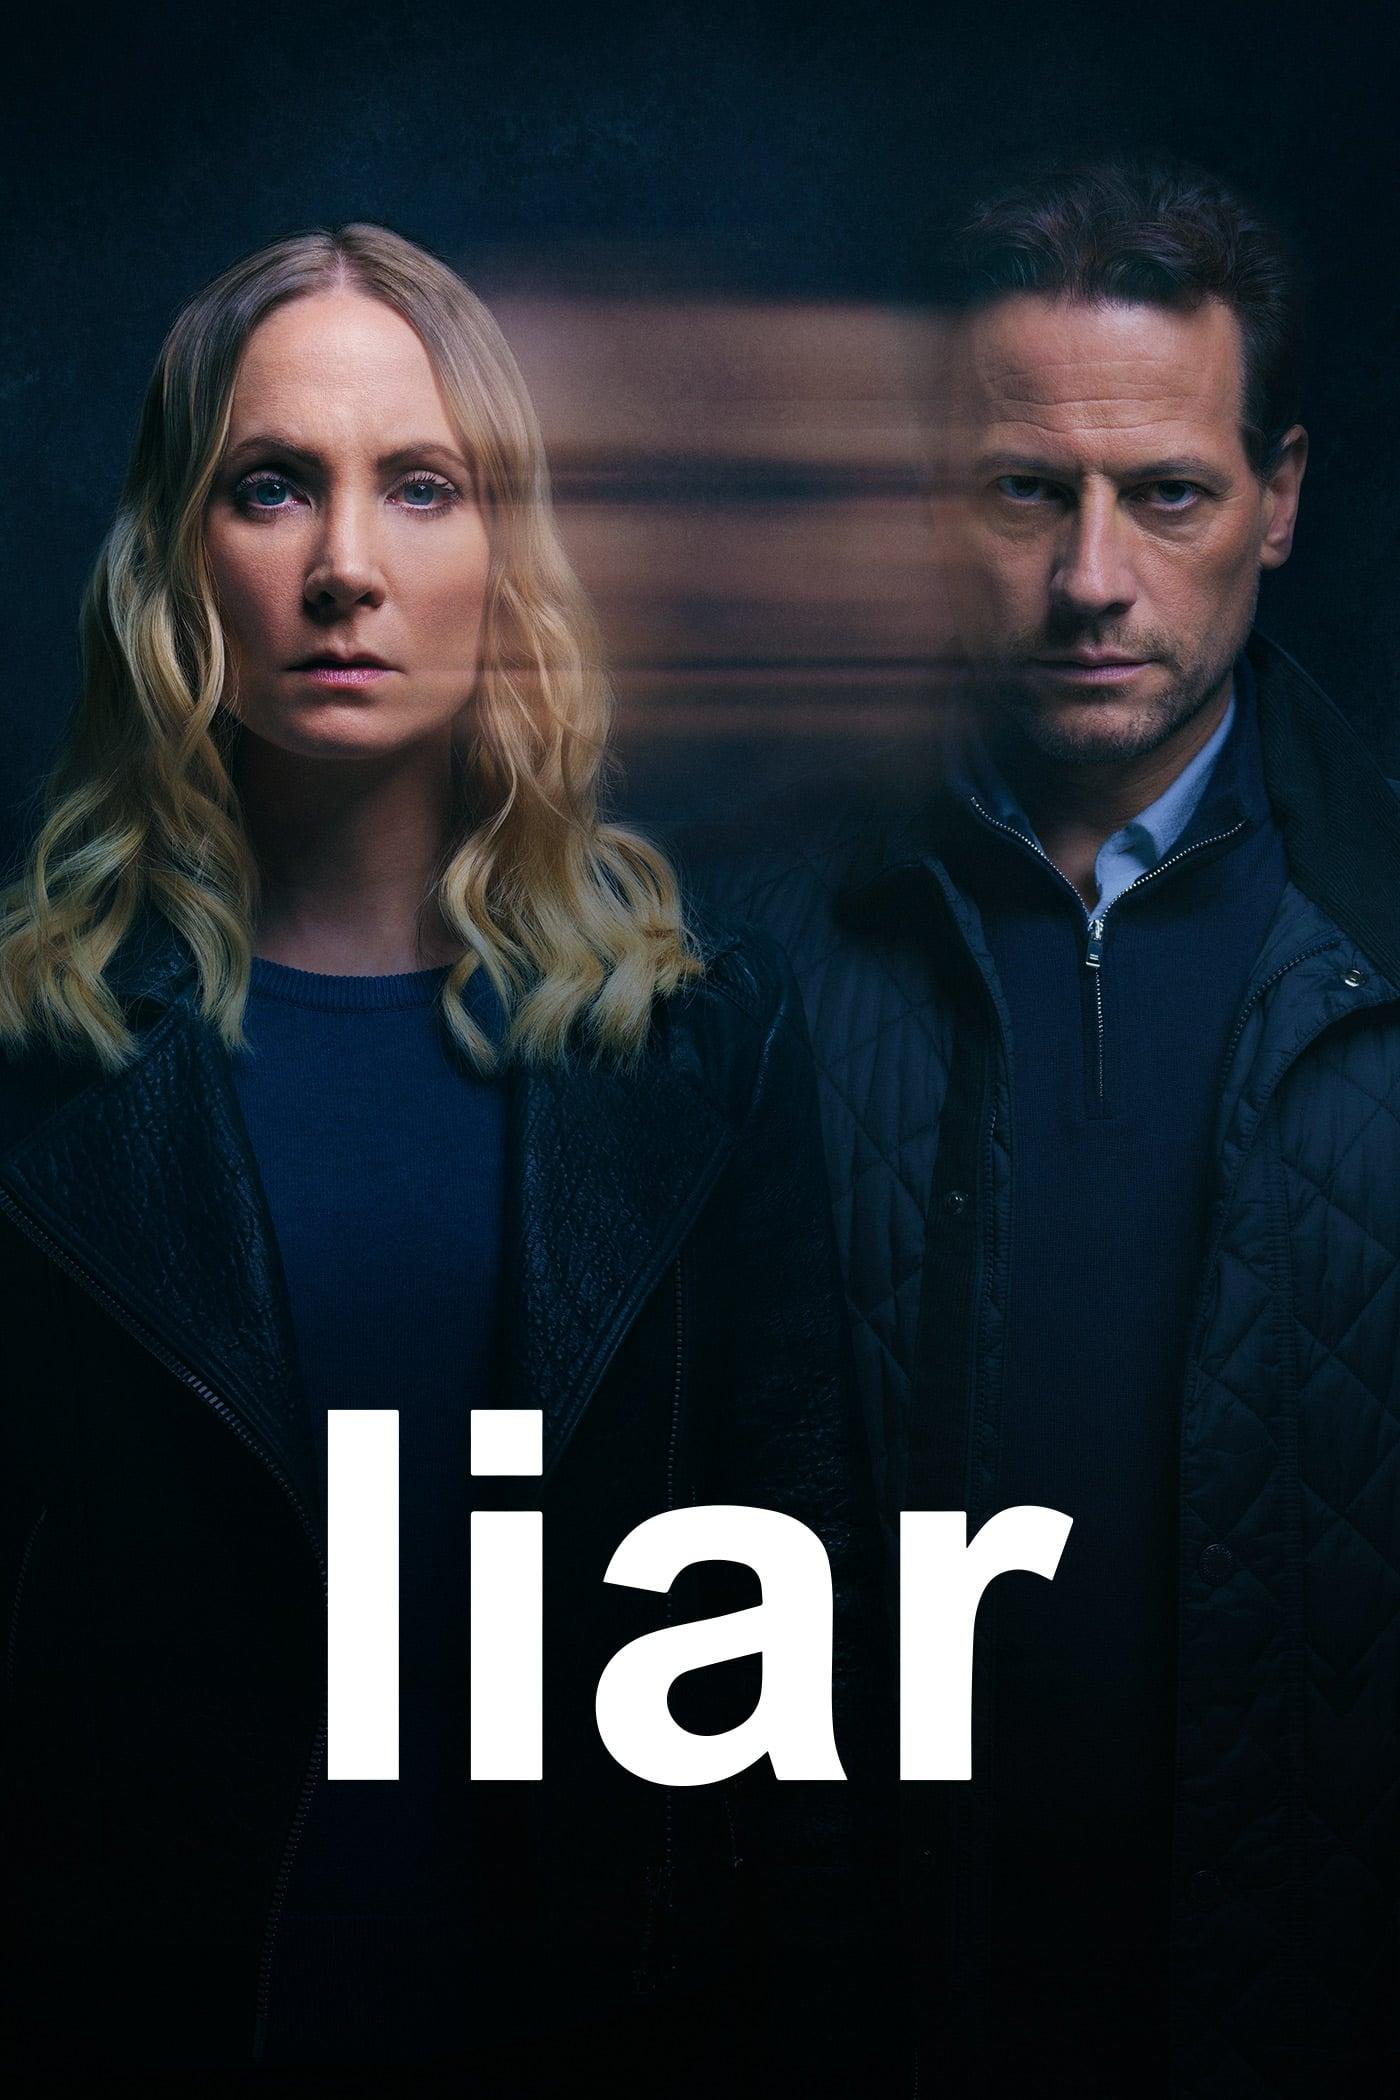 Liar poster